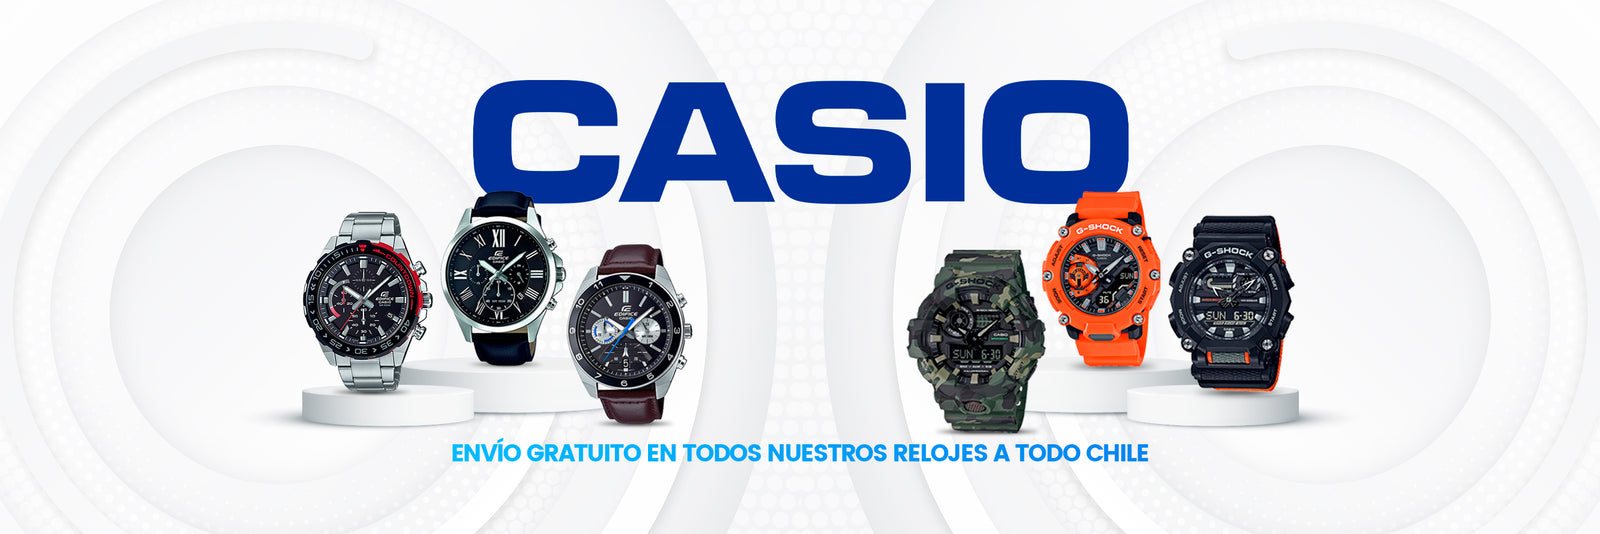 Reloj Casio G-Shock Hombre GA-140MG-1AER